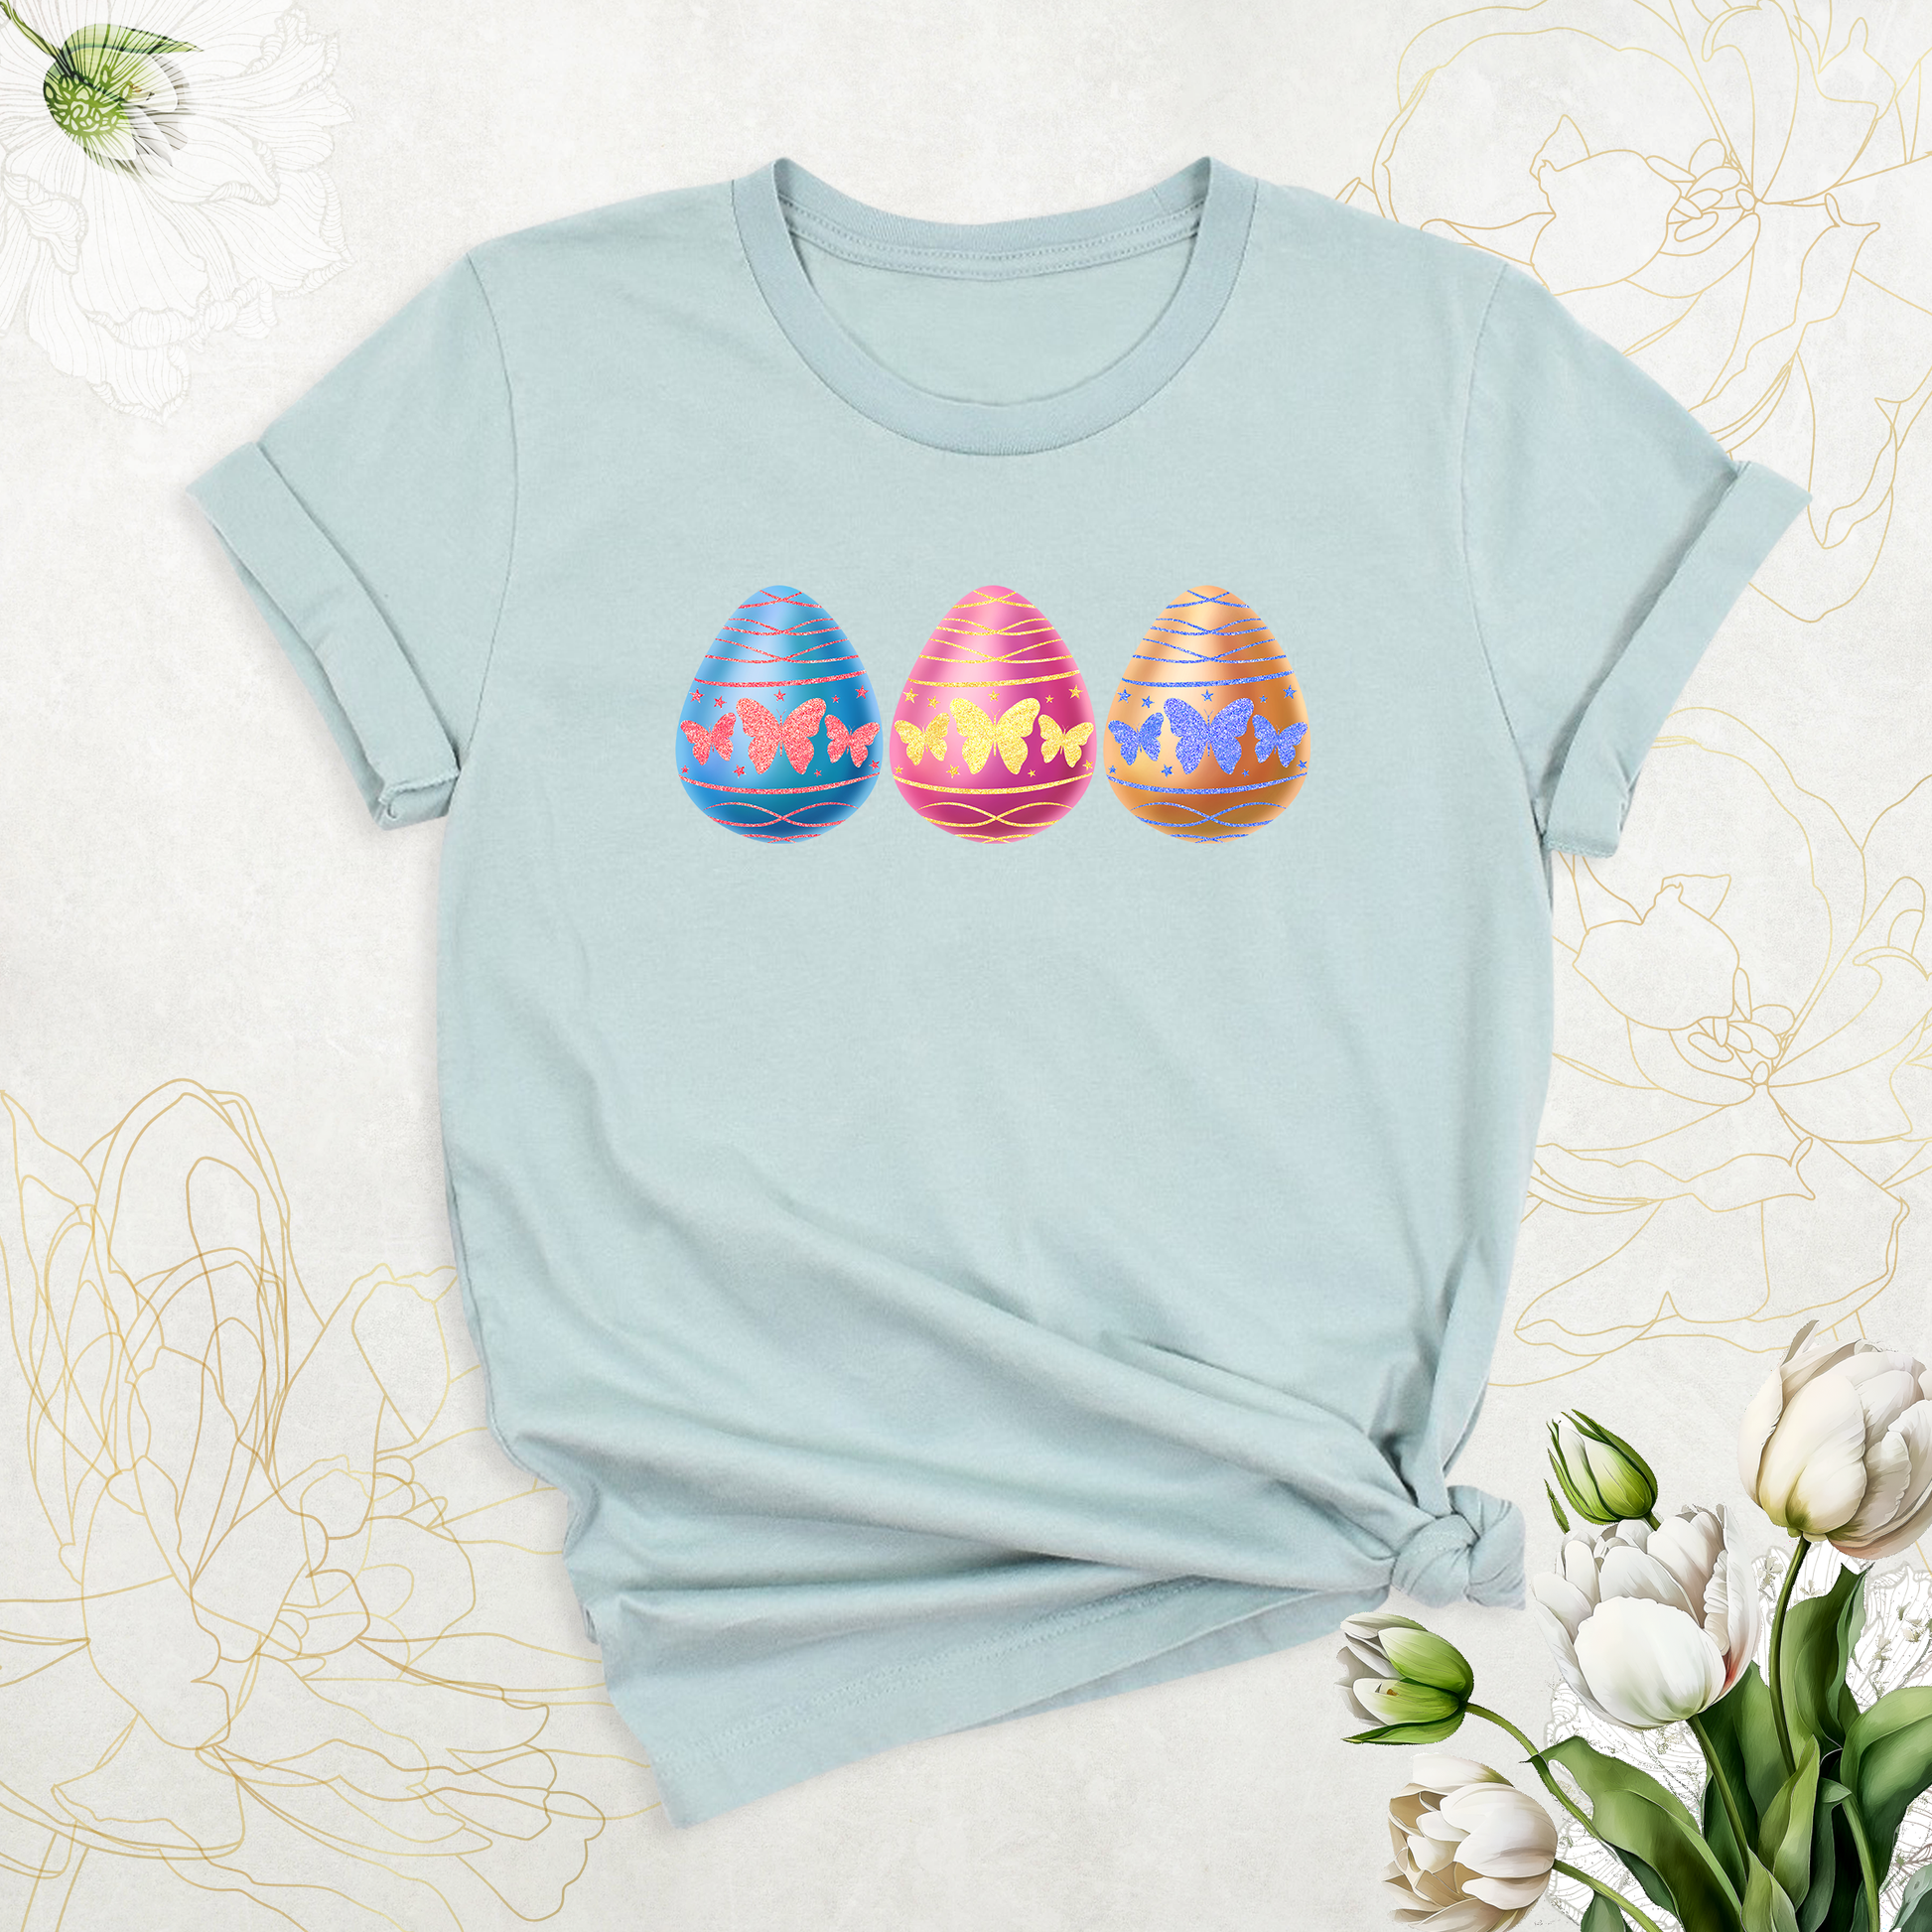 egg shirts